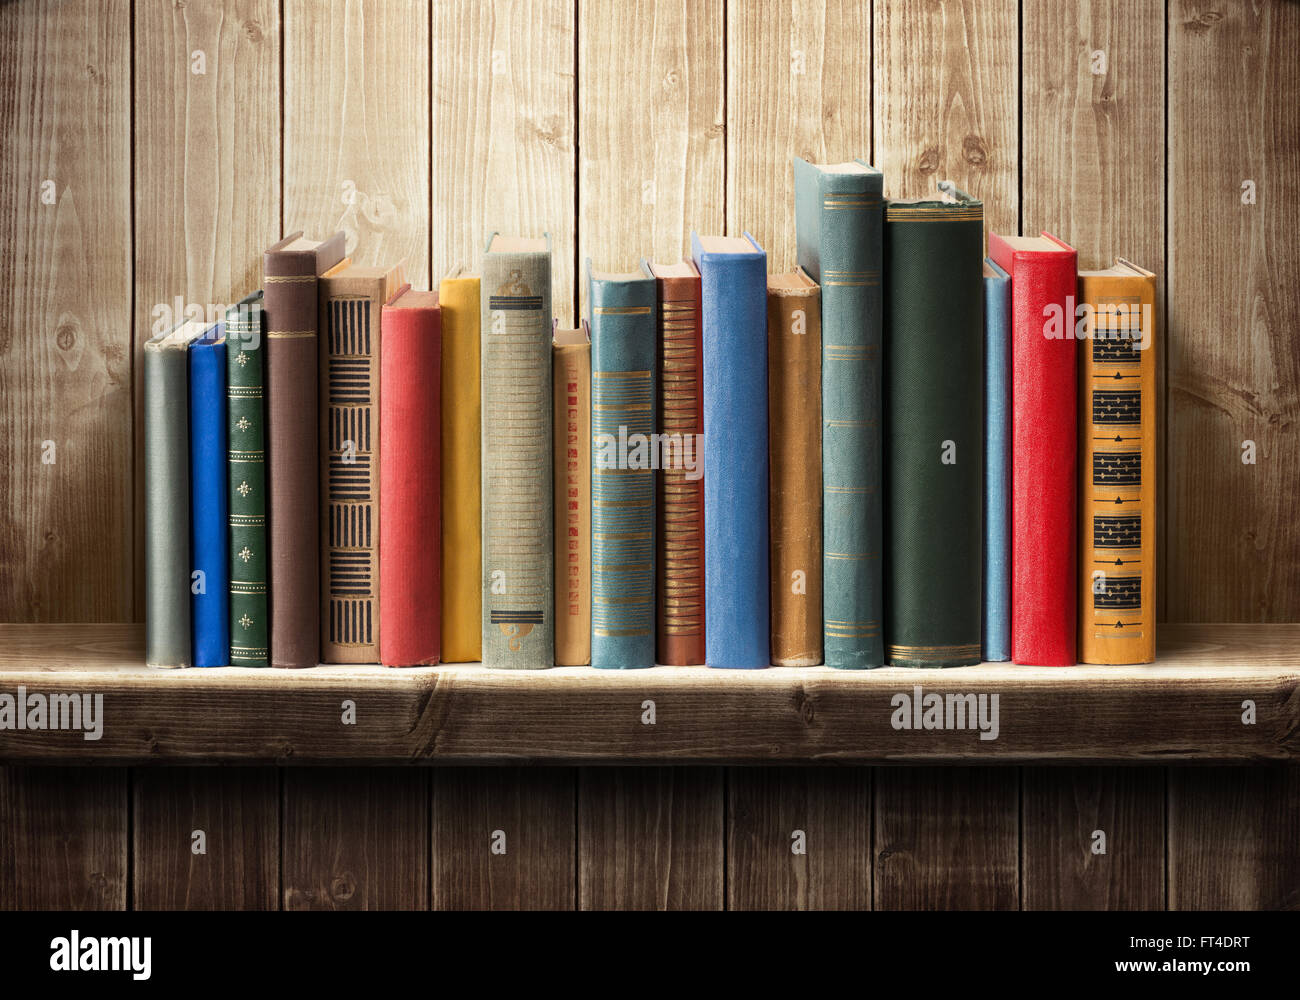 Old books on wooden shelf Stock Photo